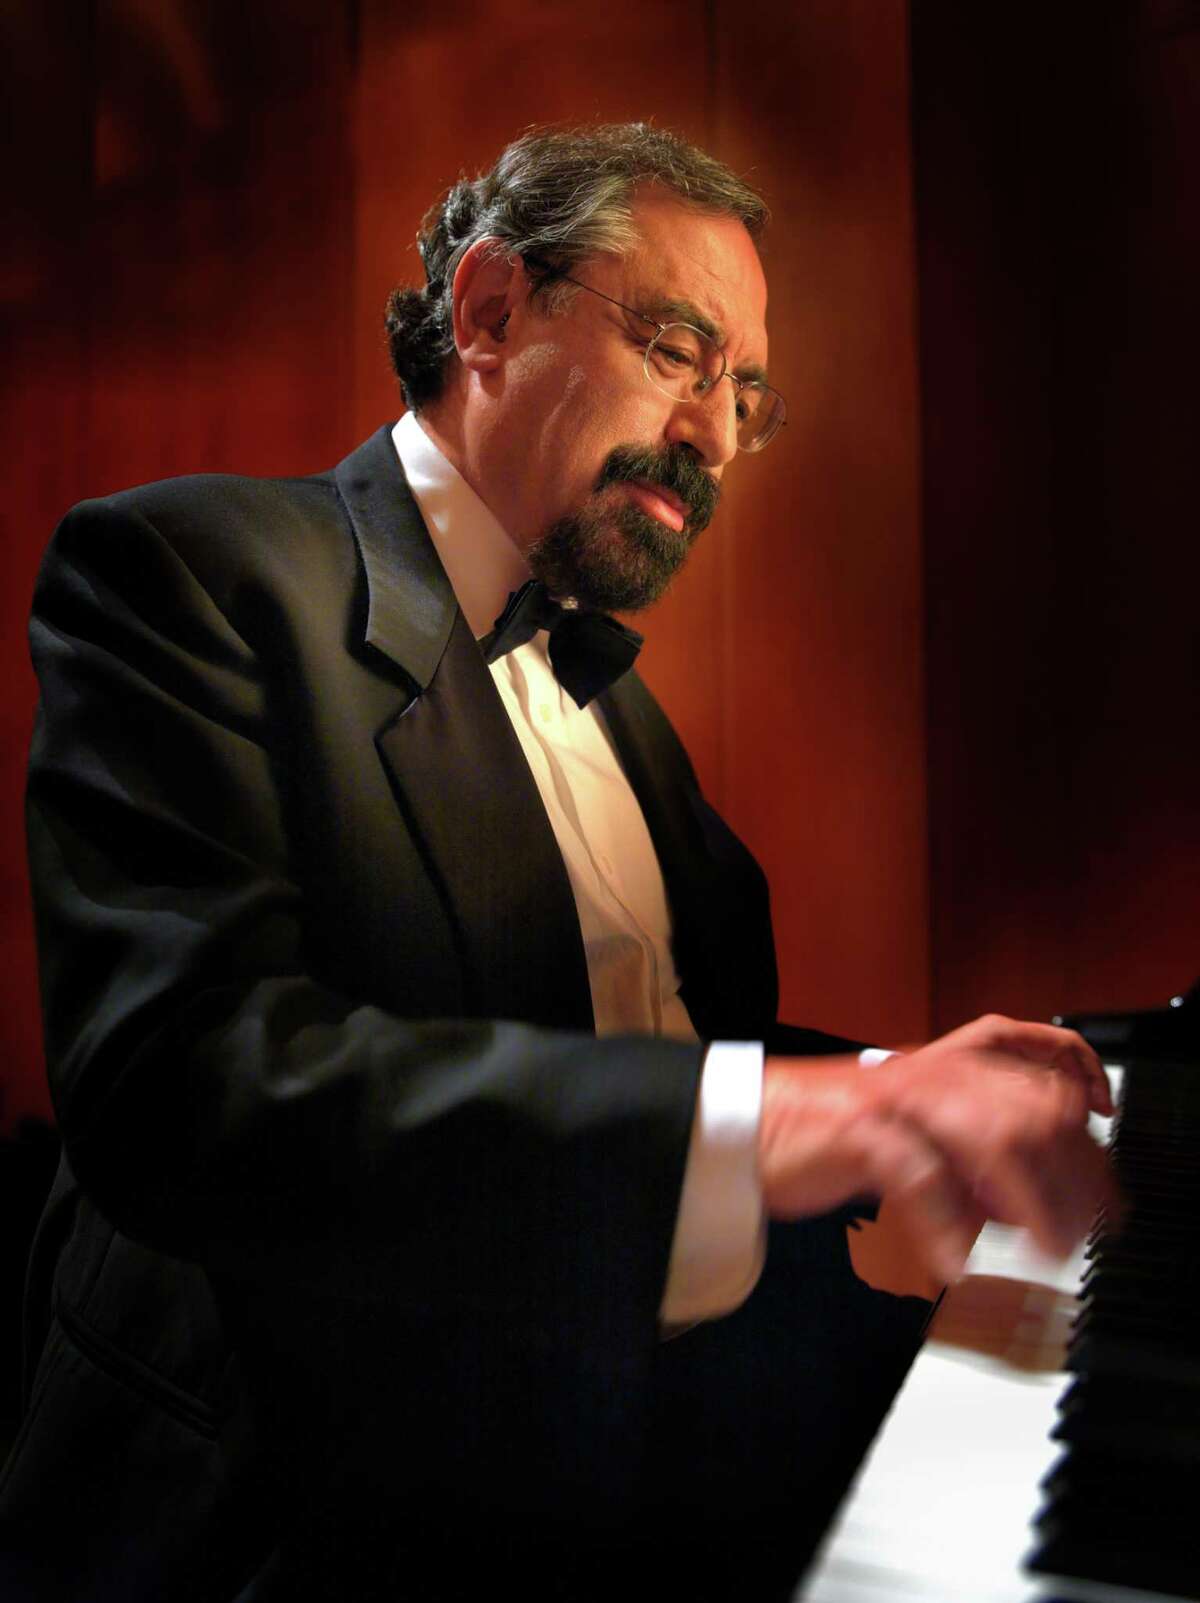 Pianist and Yale faculty member Boris Berman will perform.